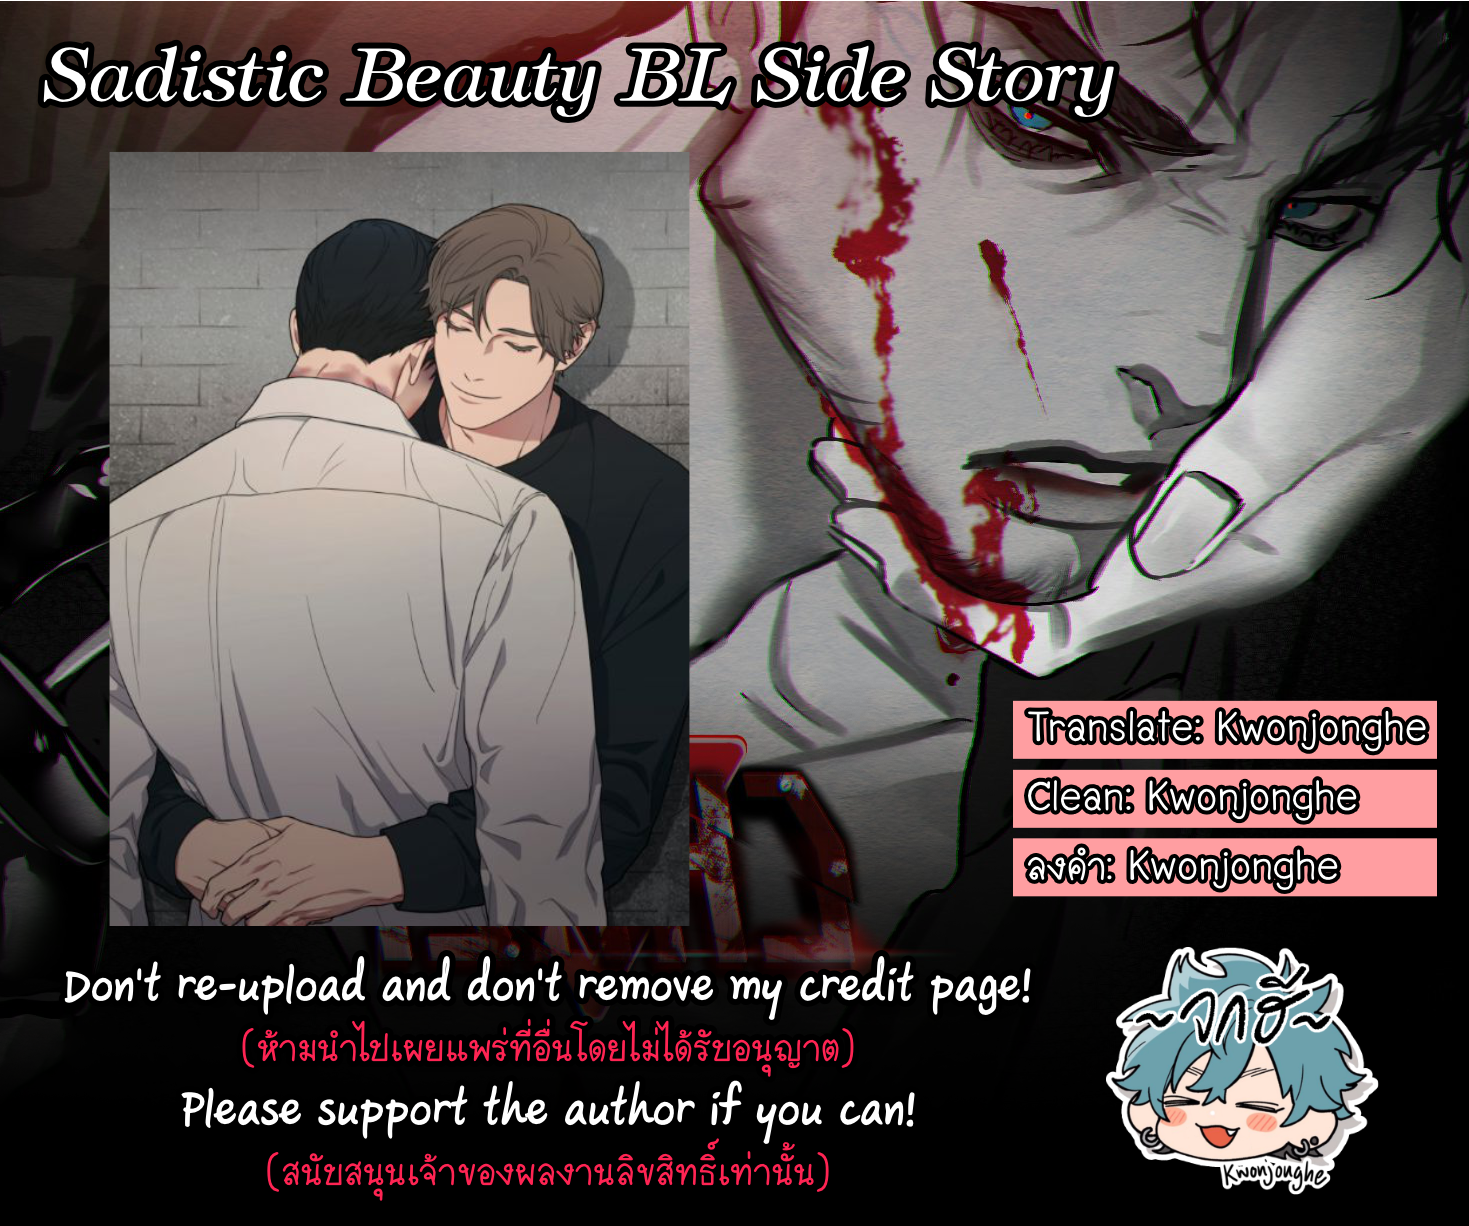 Sadistic Beauty Side Story B 19 (2)